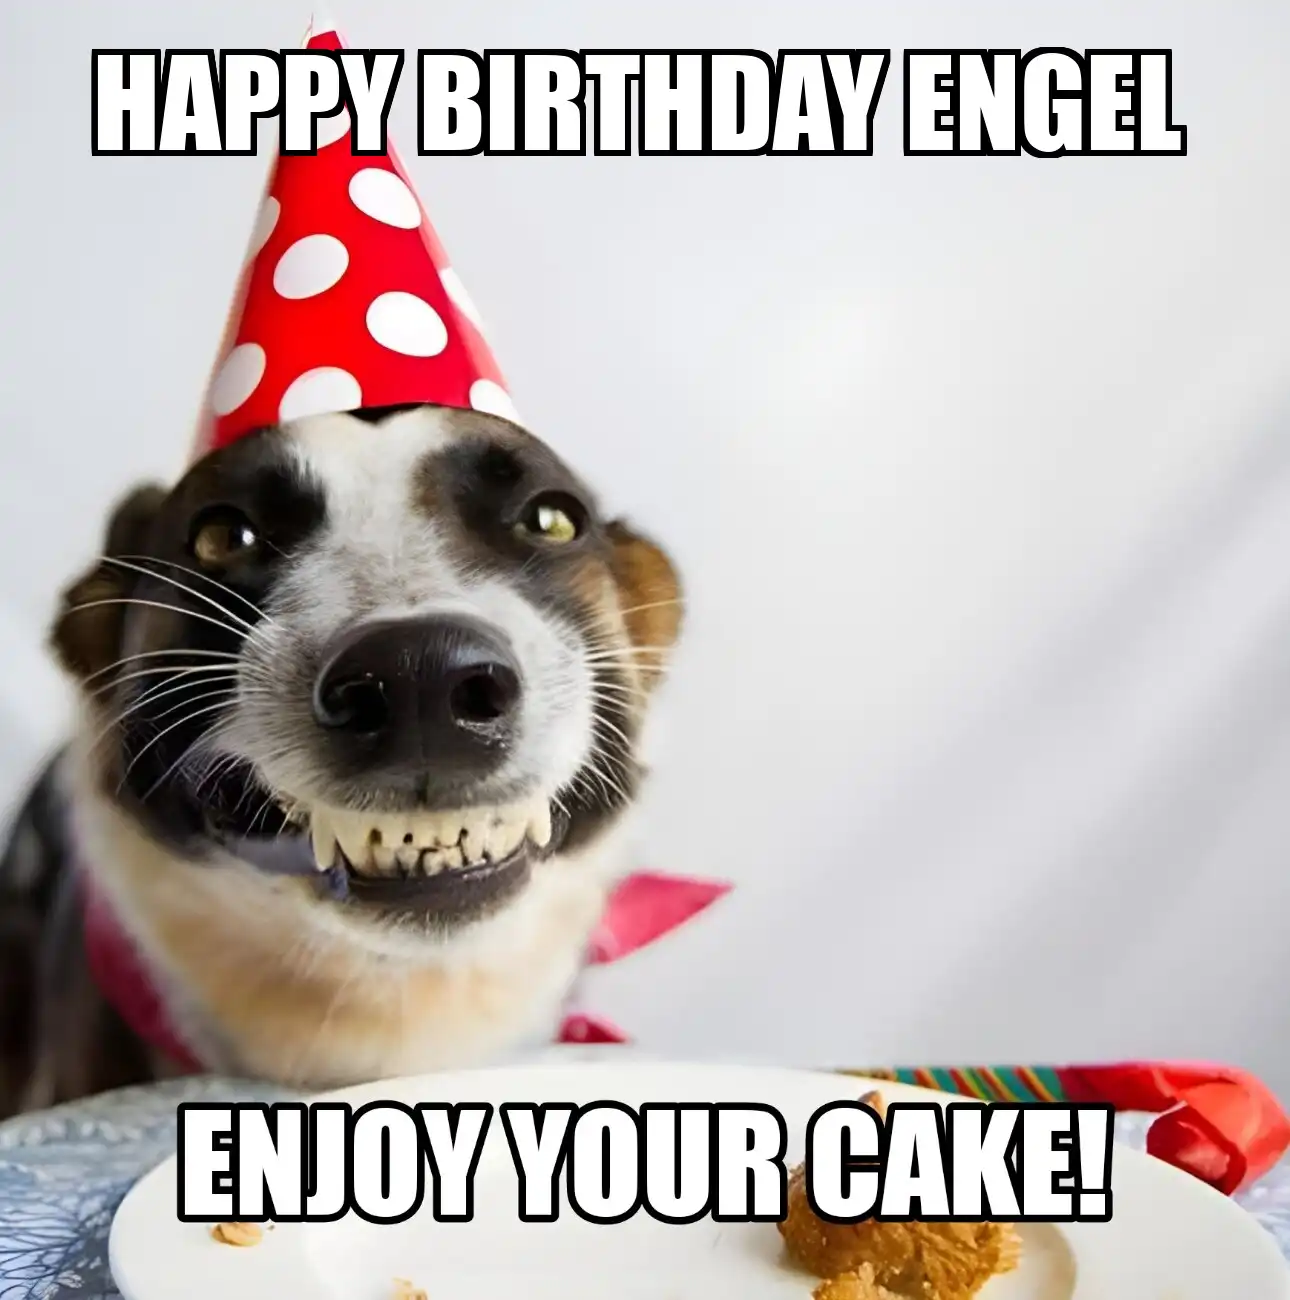 Happy Birthday Engel Enjoy Your Cake Dog Meme